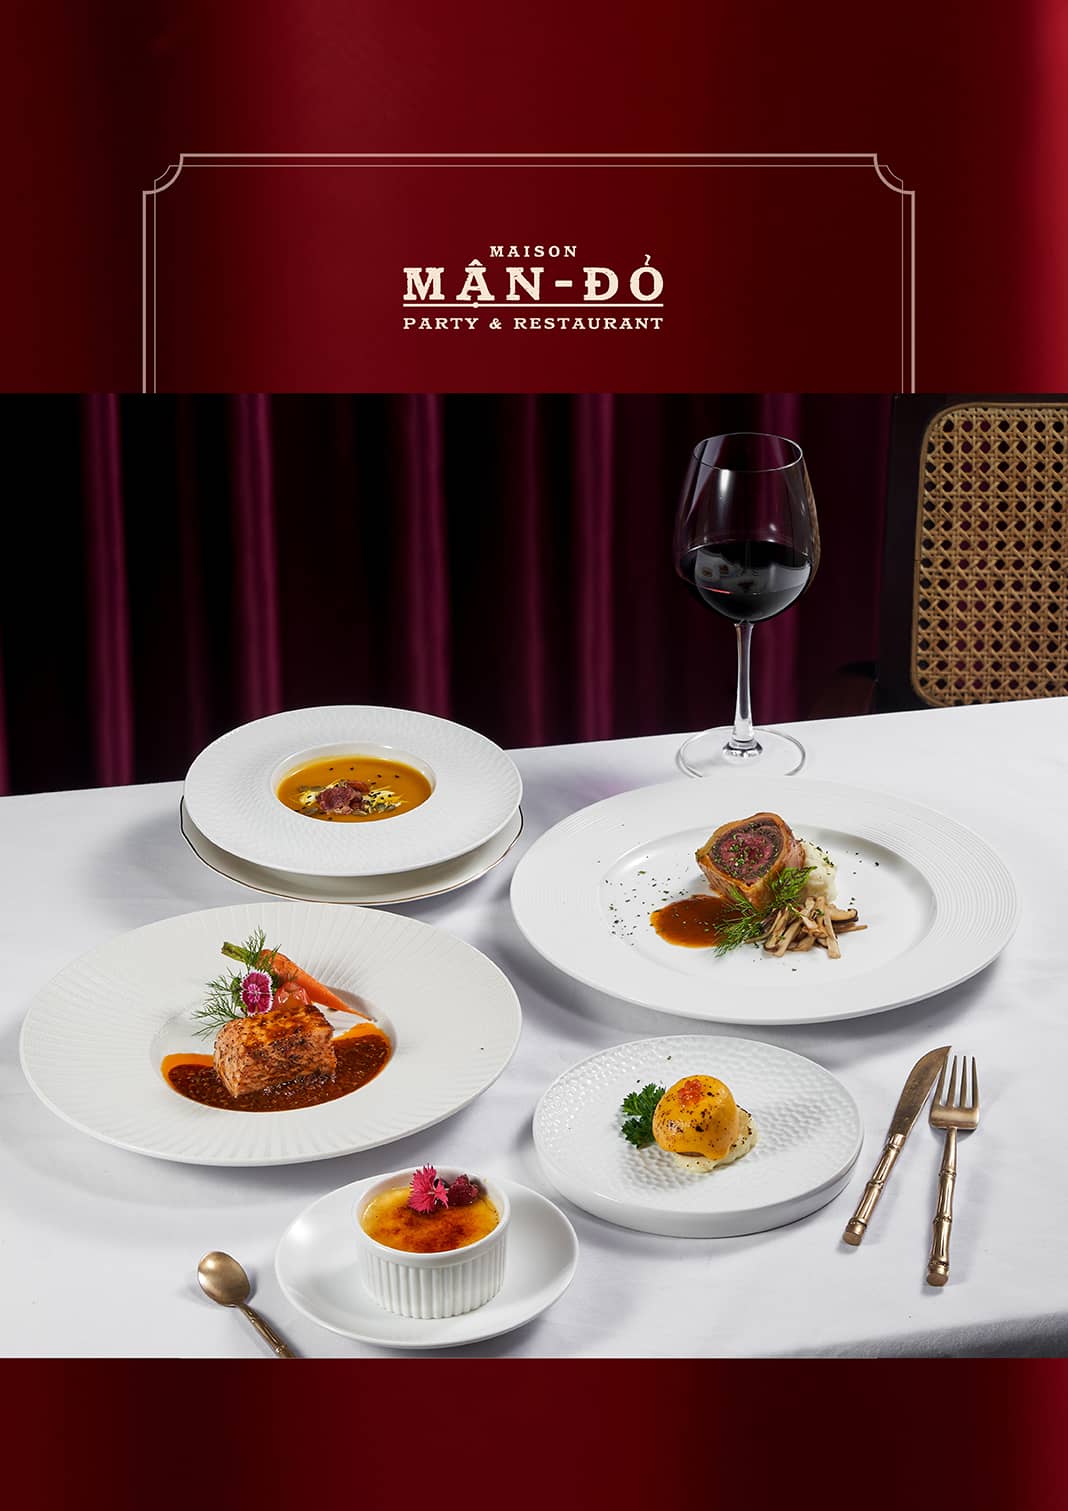 Set Dinner at Maison Mando